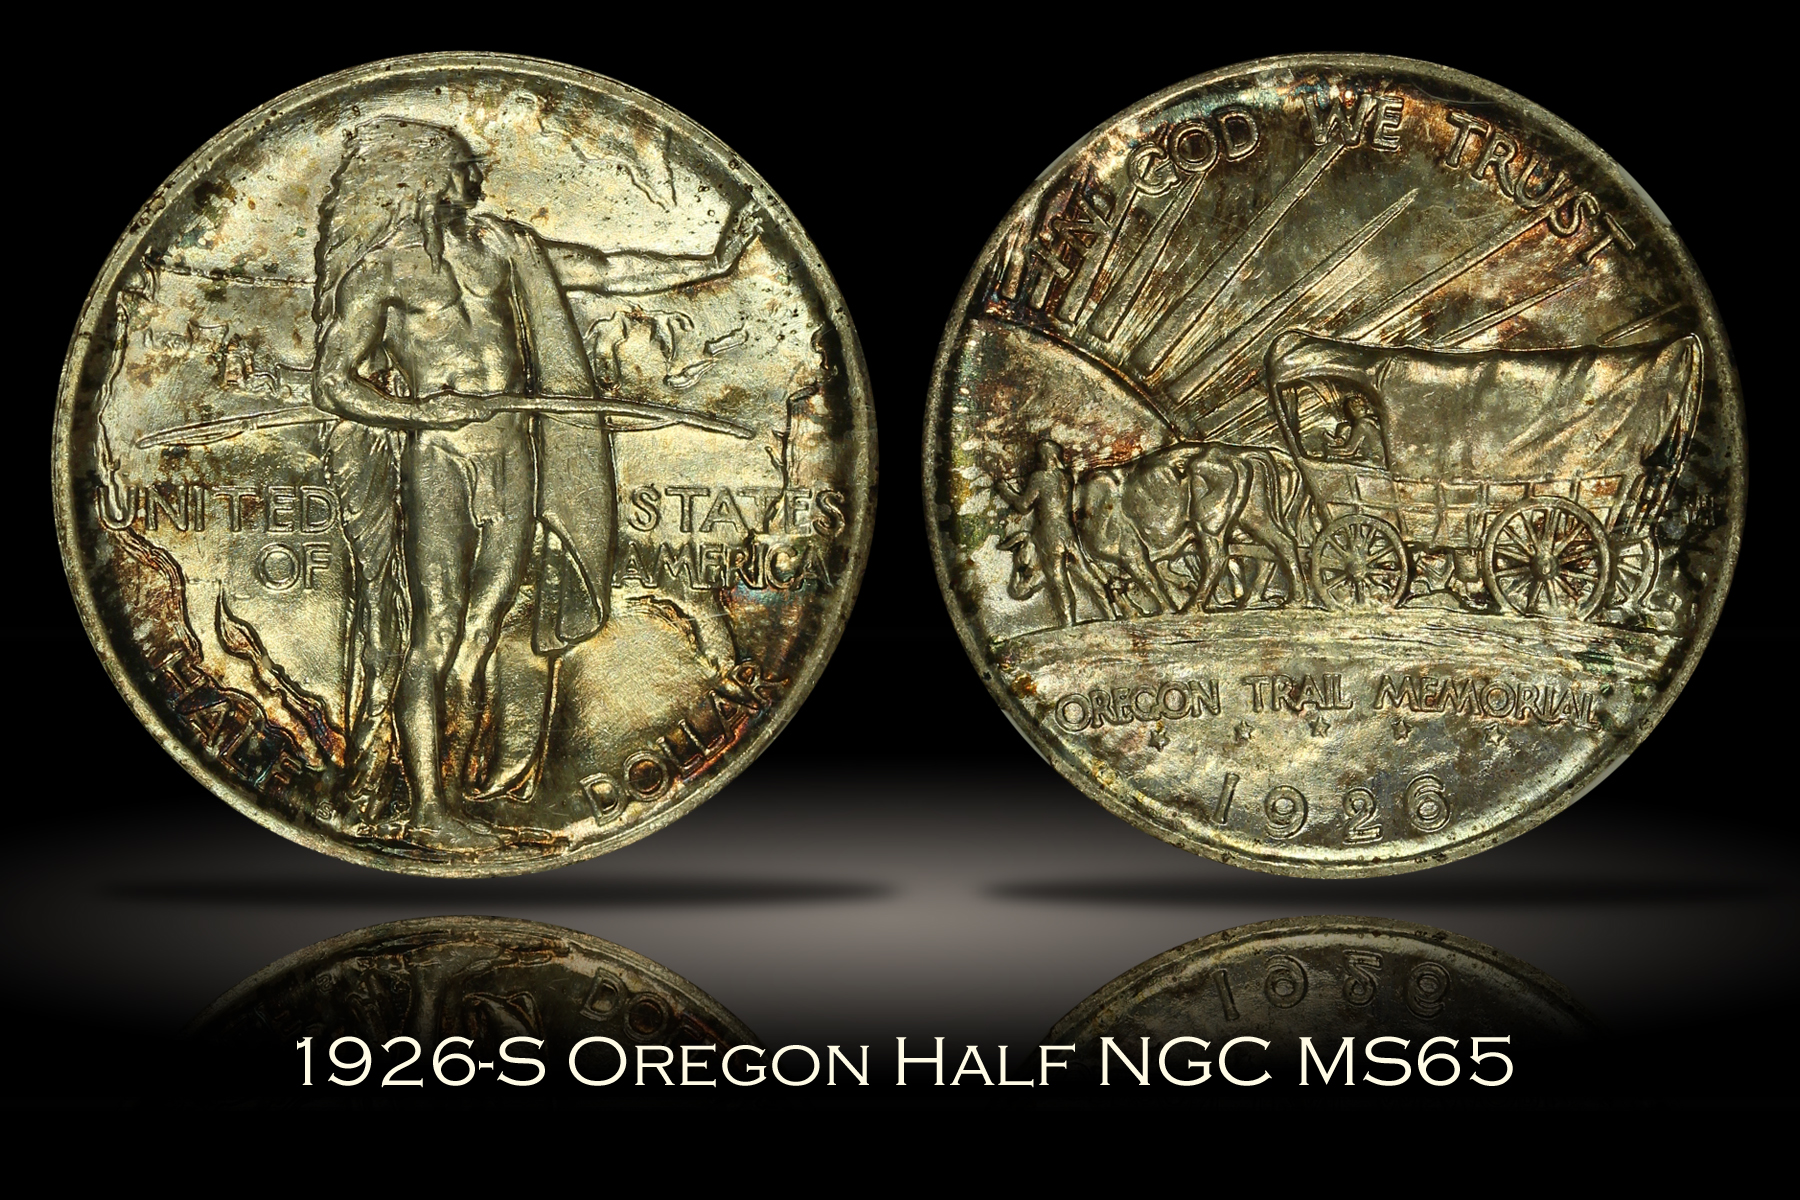 1926-S Oregon Trail Memorial Half NGC MS65